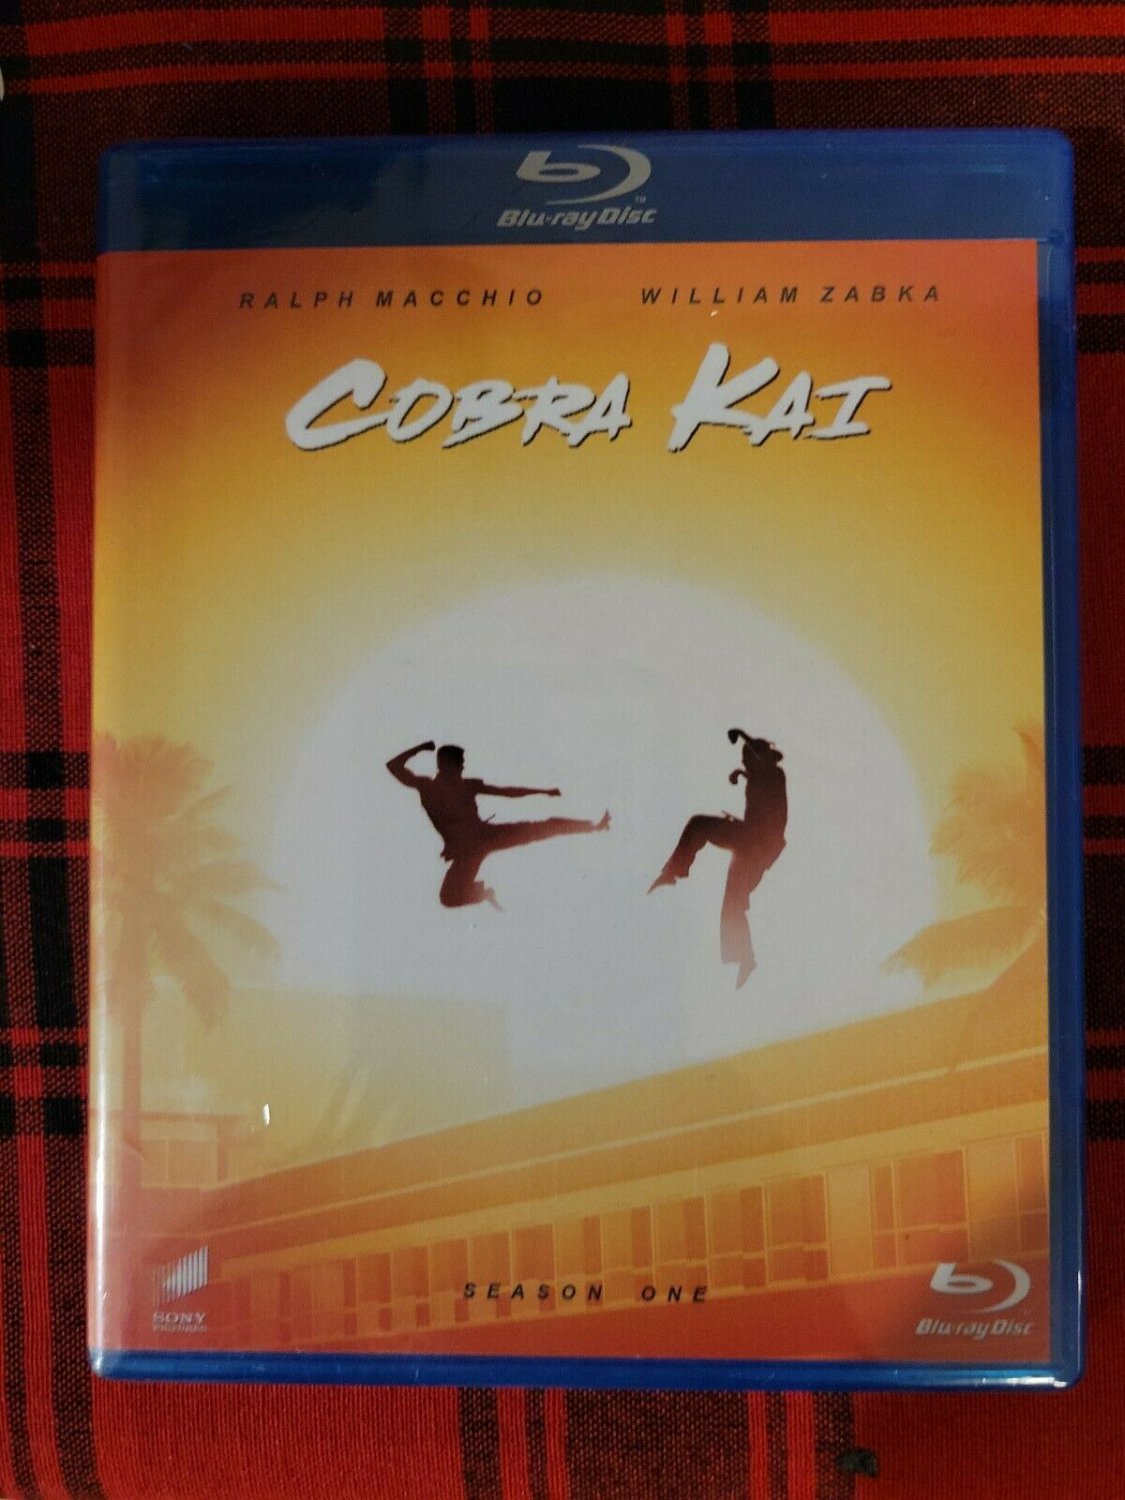 Cobra Kai Season 1 (Blu-ray) 2018 - Action, Drama, TV Series